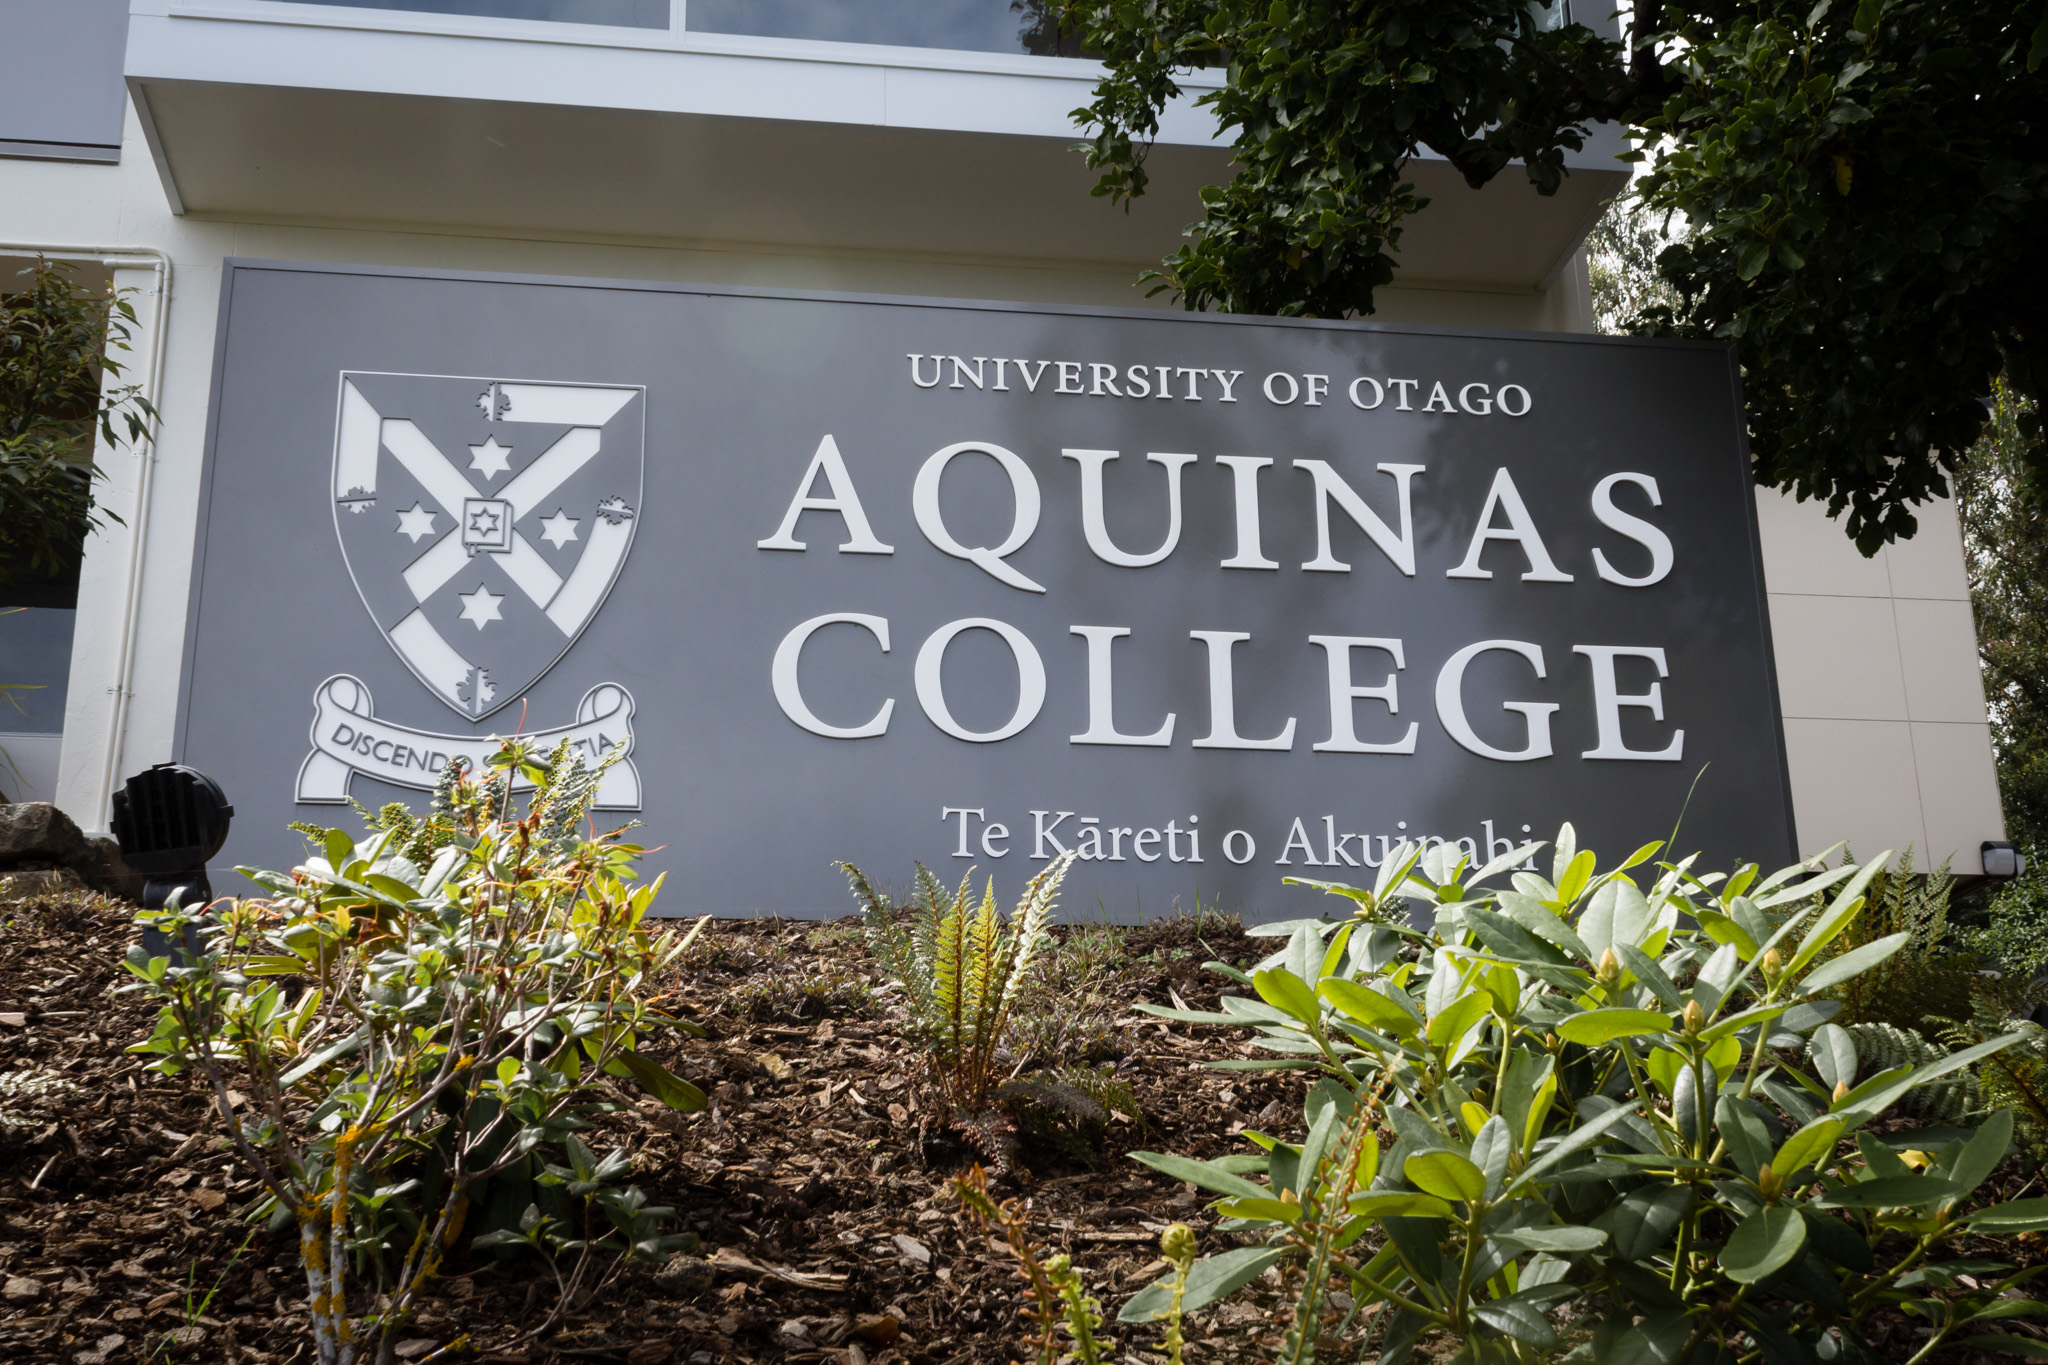 External signage dunedin Aquinas college